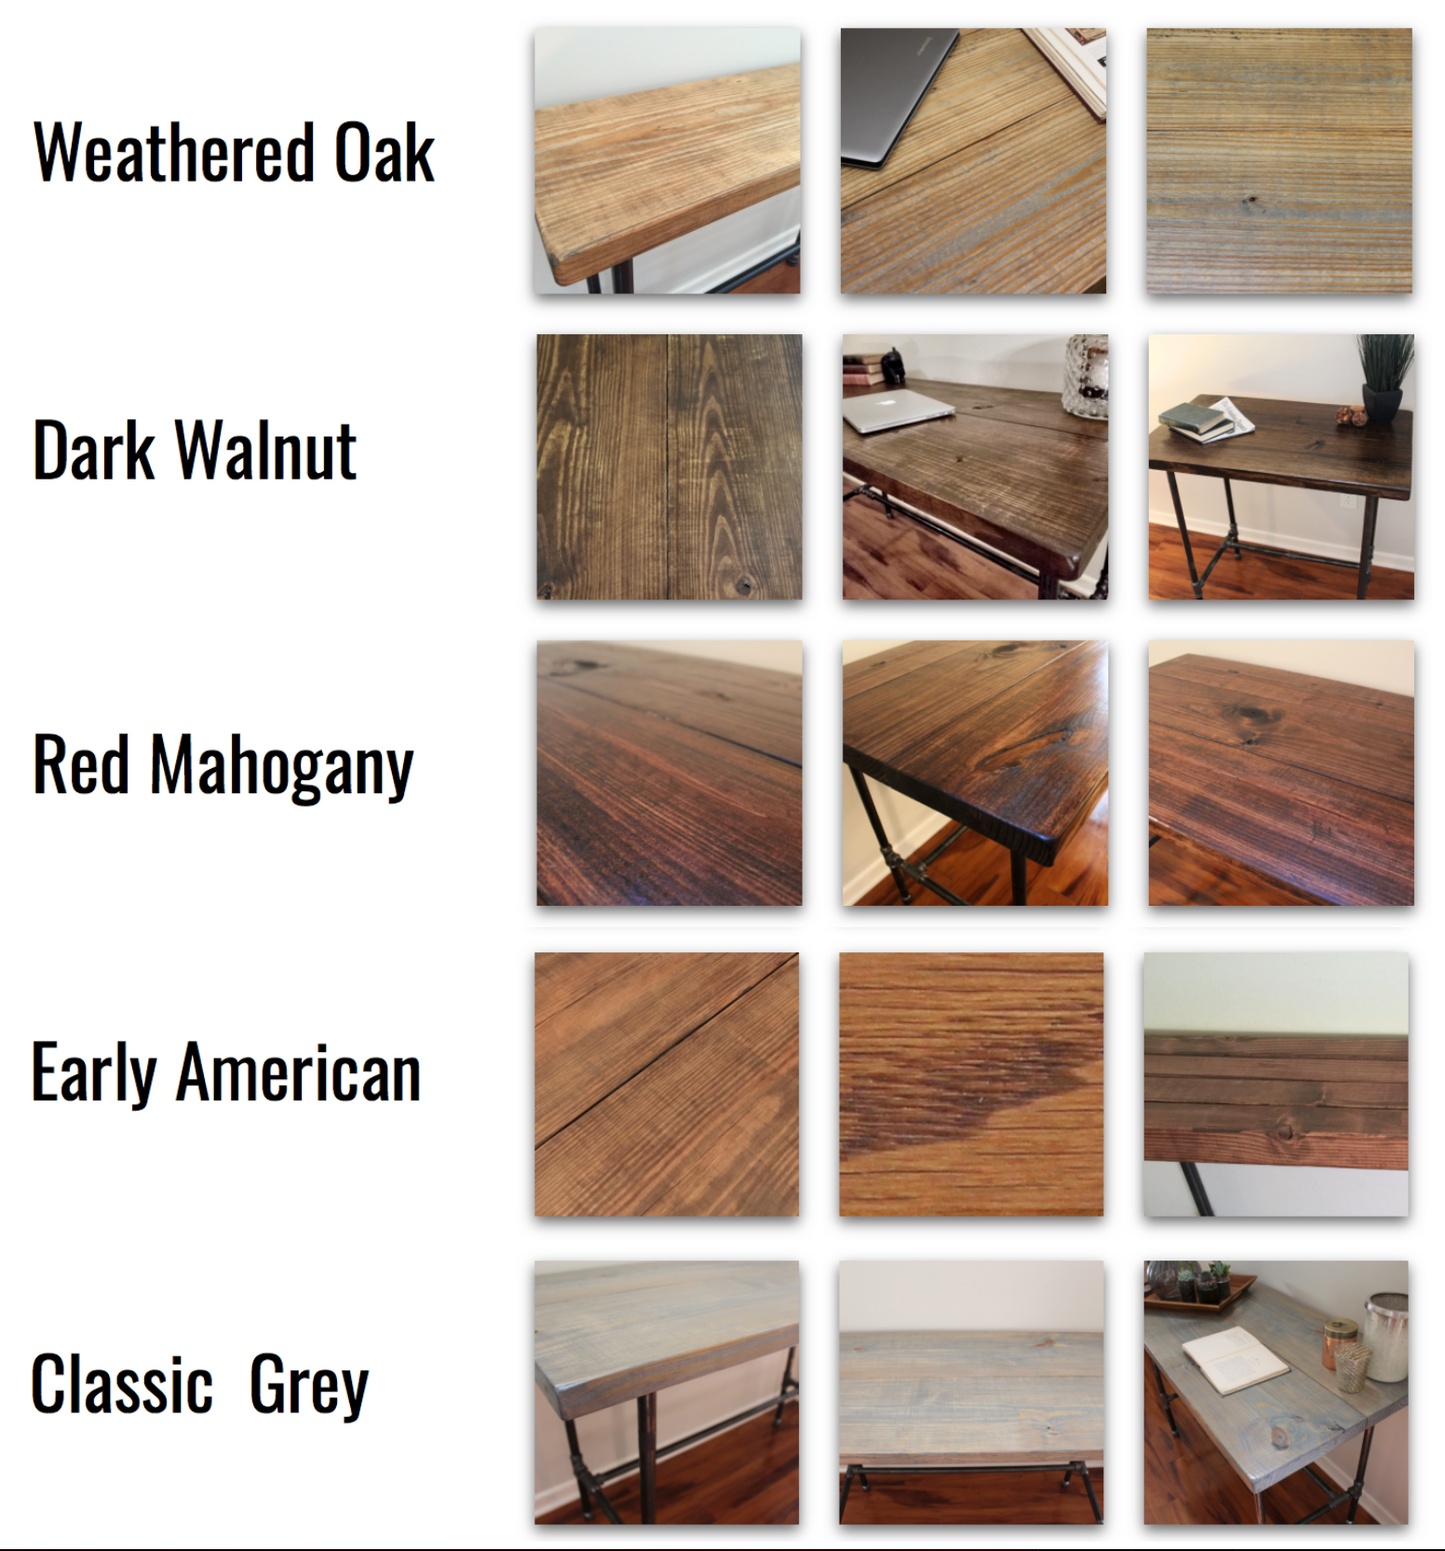 Steel and Pine Wood Weathered Coffee Table w/ Cross Shelf